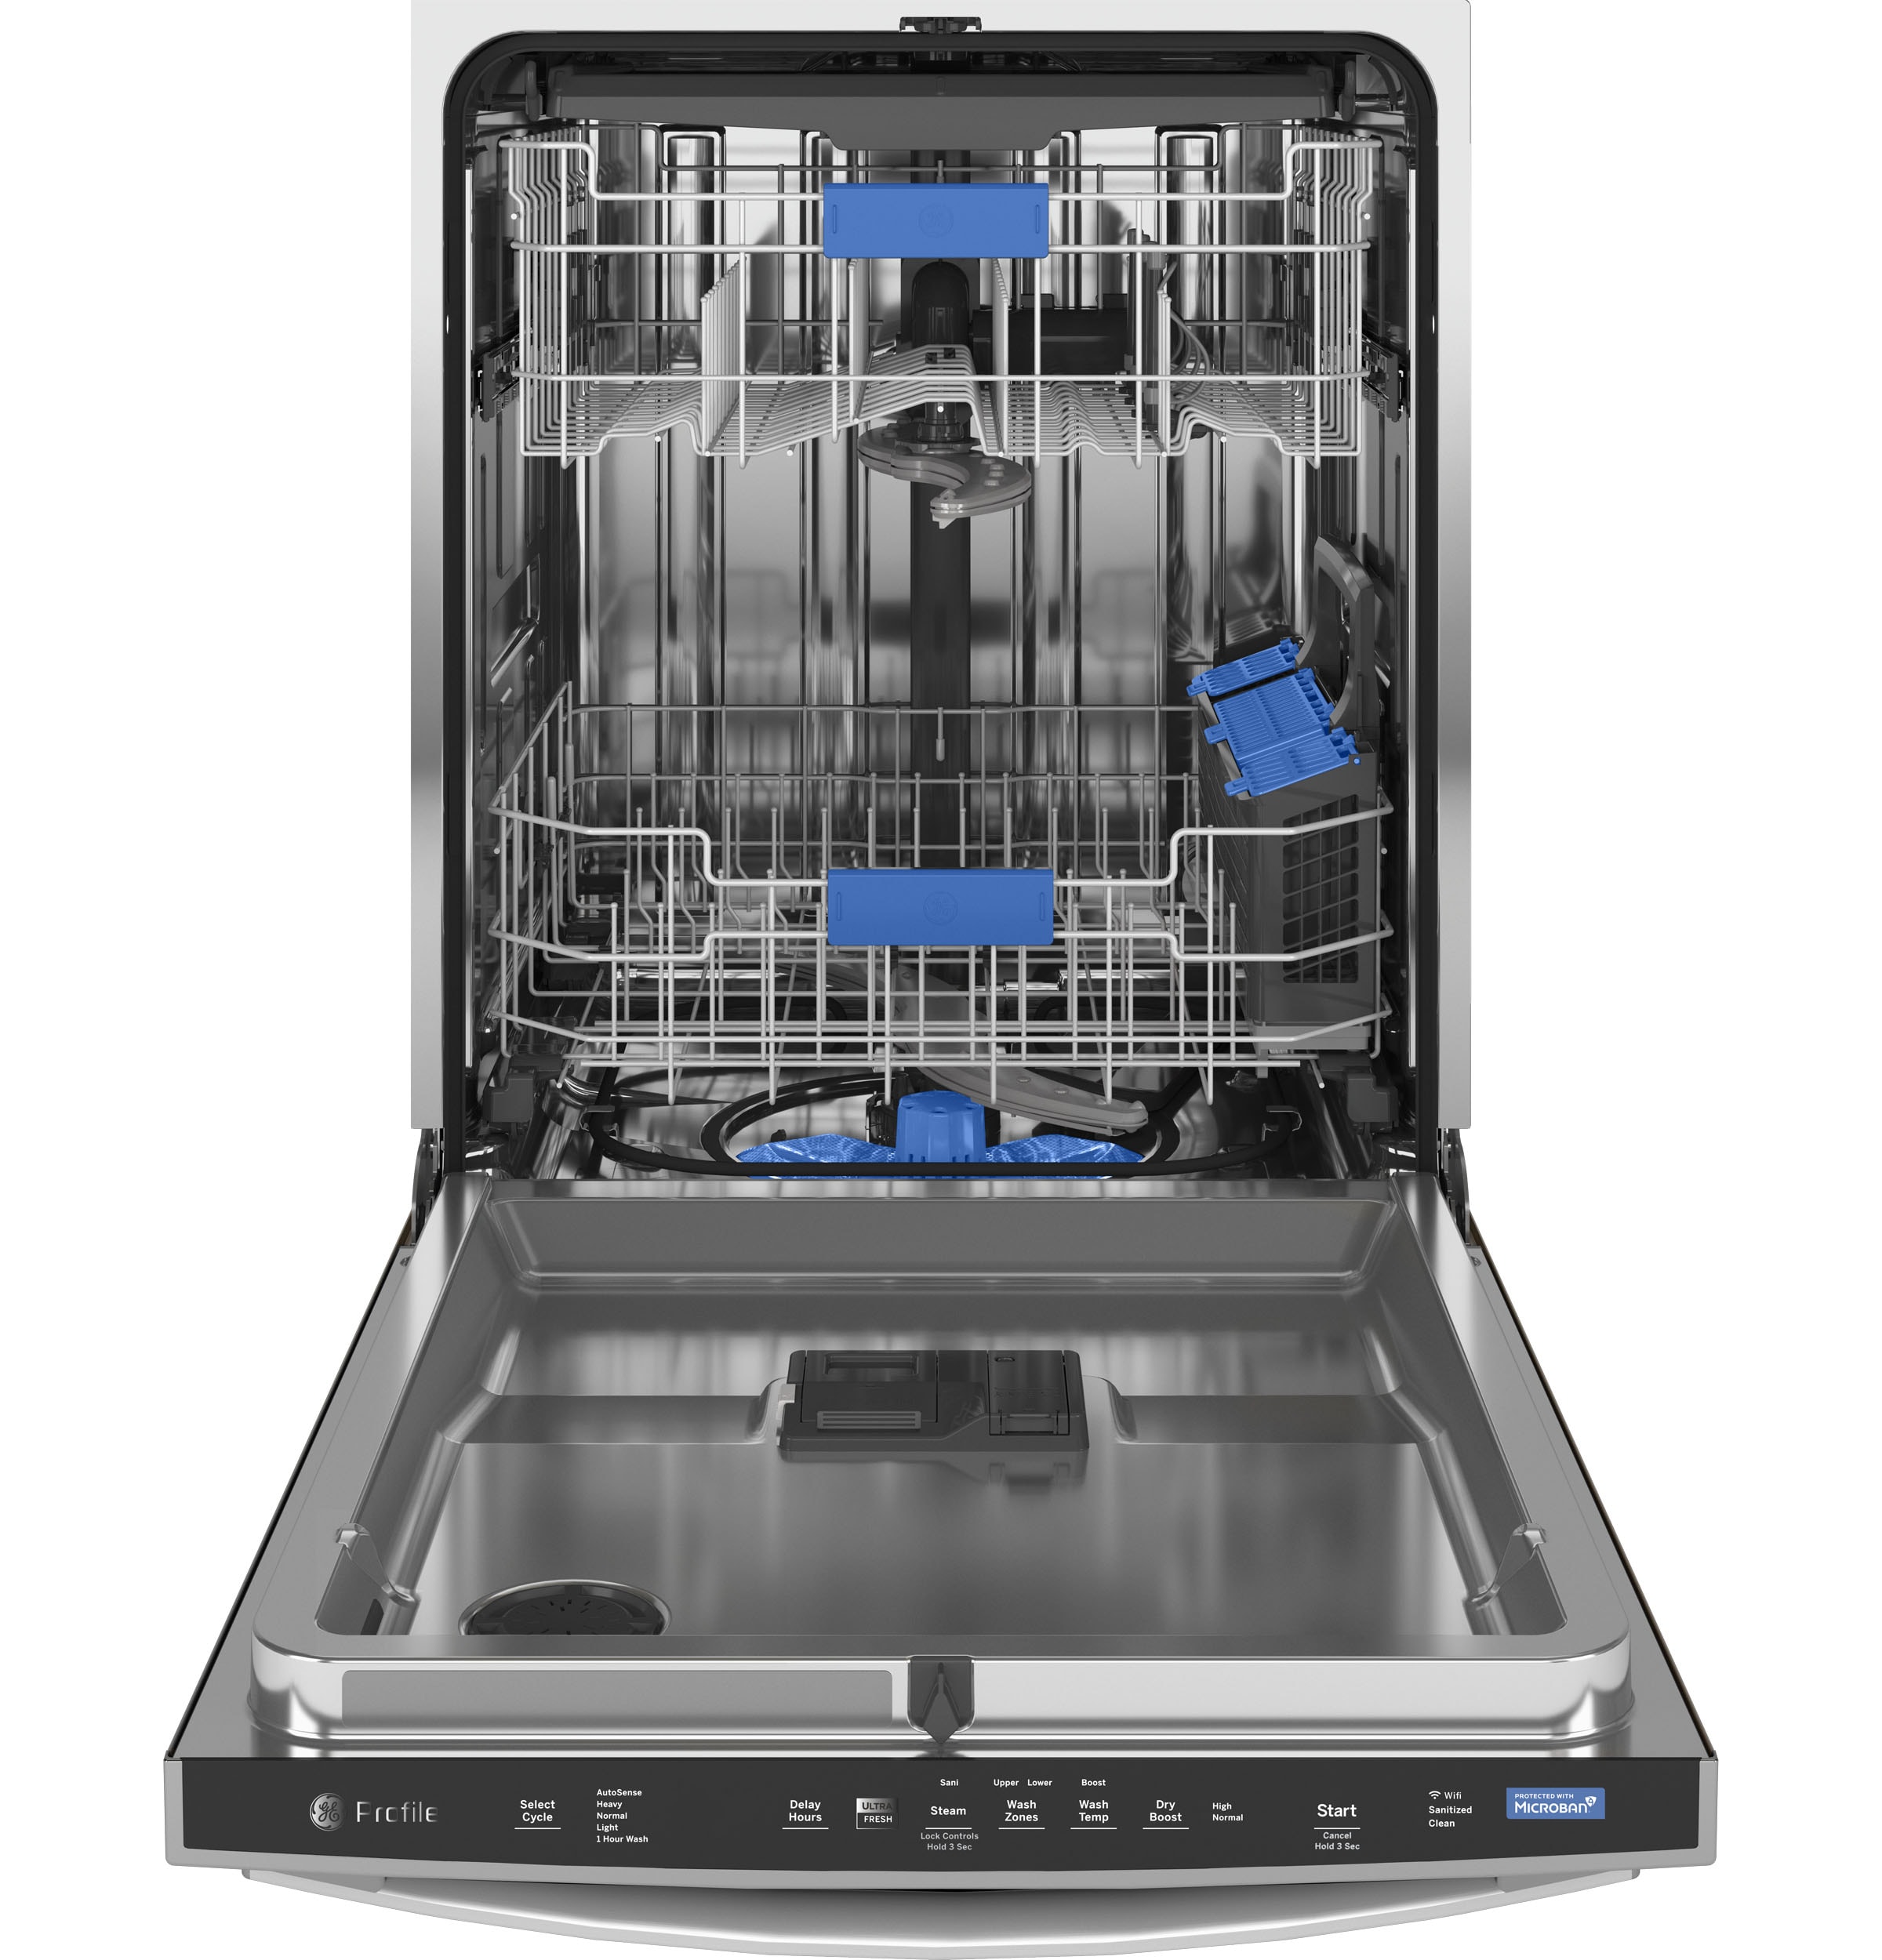 GE Profile UltraFresh Top Control 24-in Smart Built-In Dishwasher 